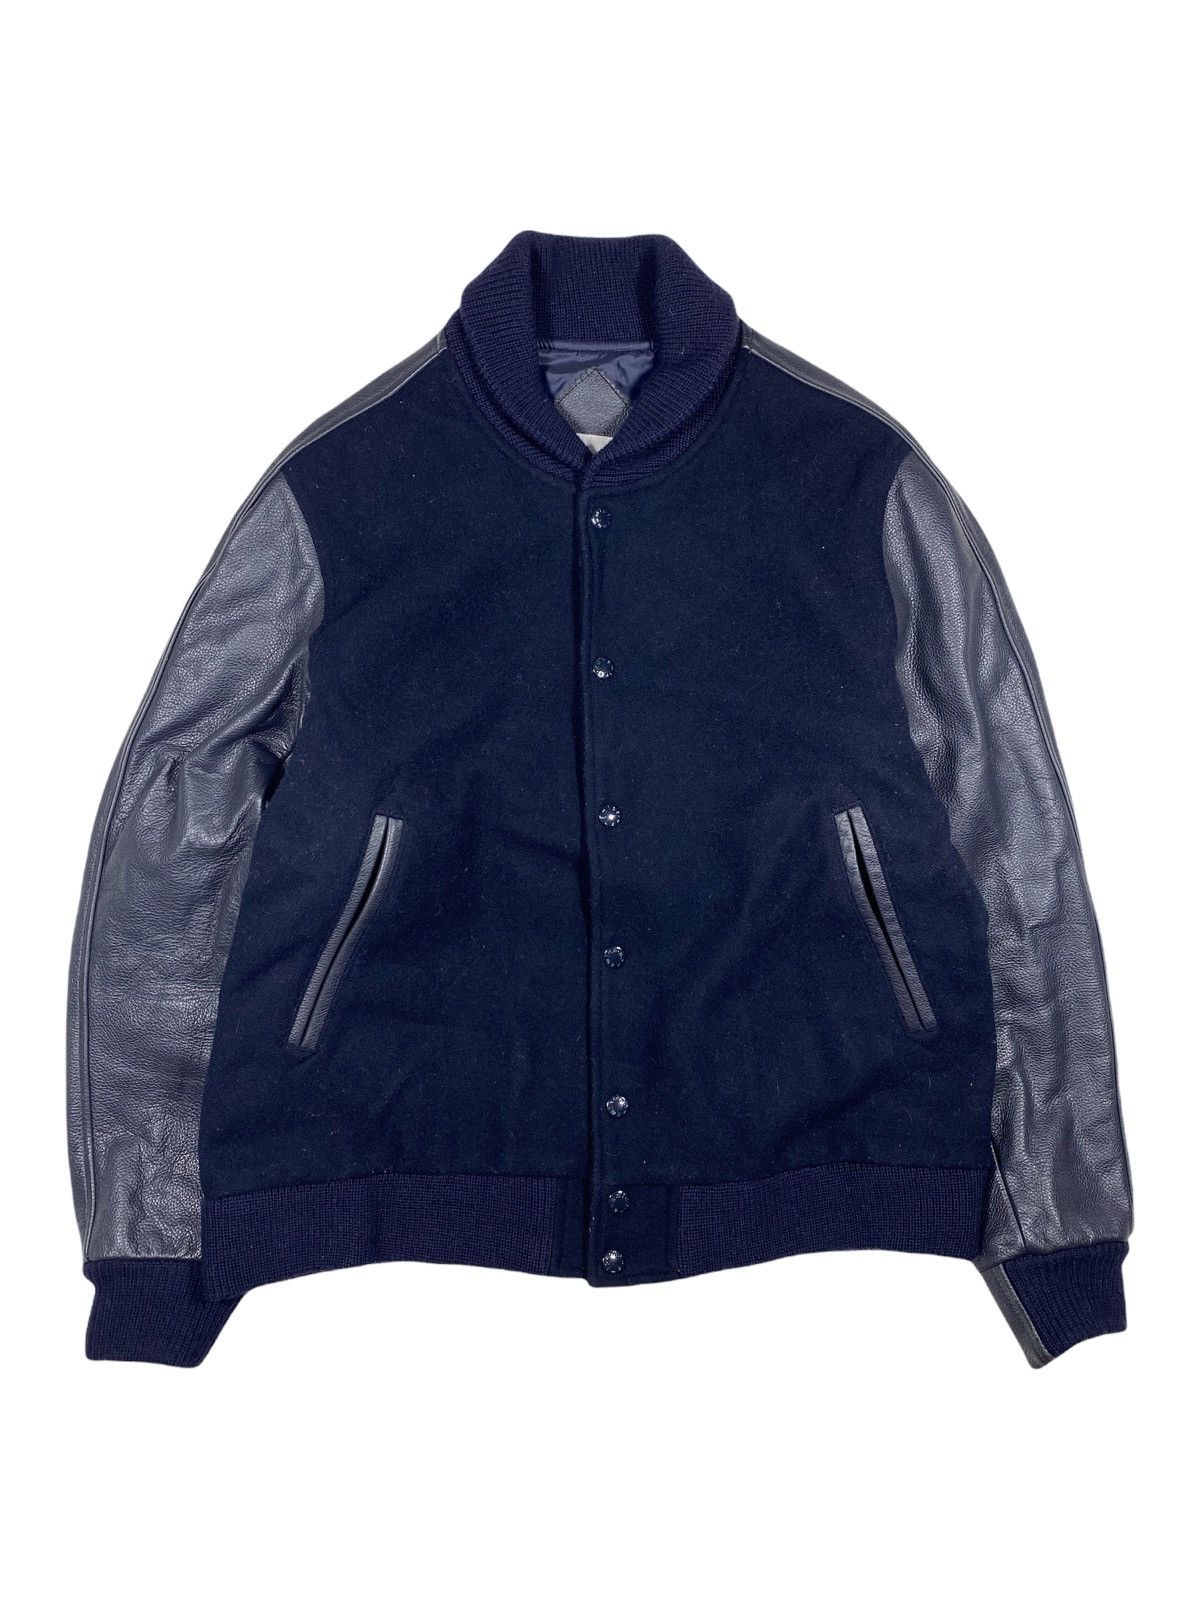 Nanamica Nanamica Wool and Leather Varsity Jacket | Grailed